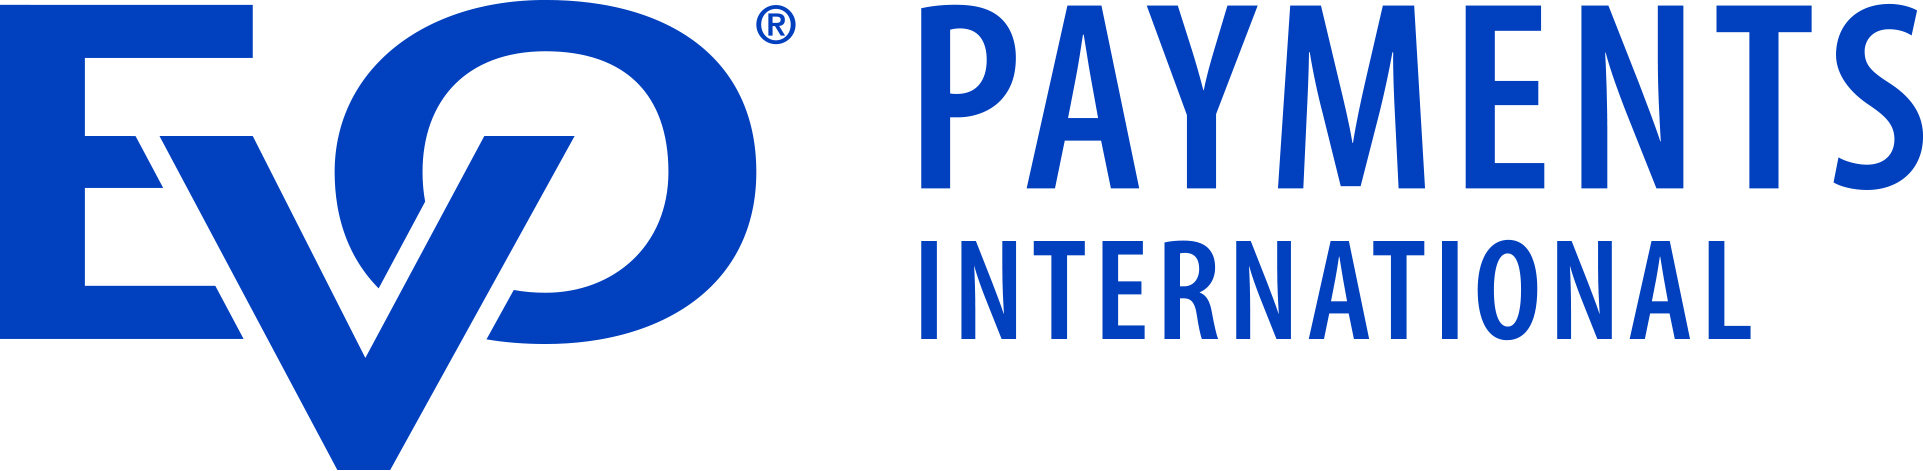 logo for EVO Payments International UK LTD